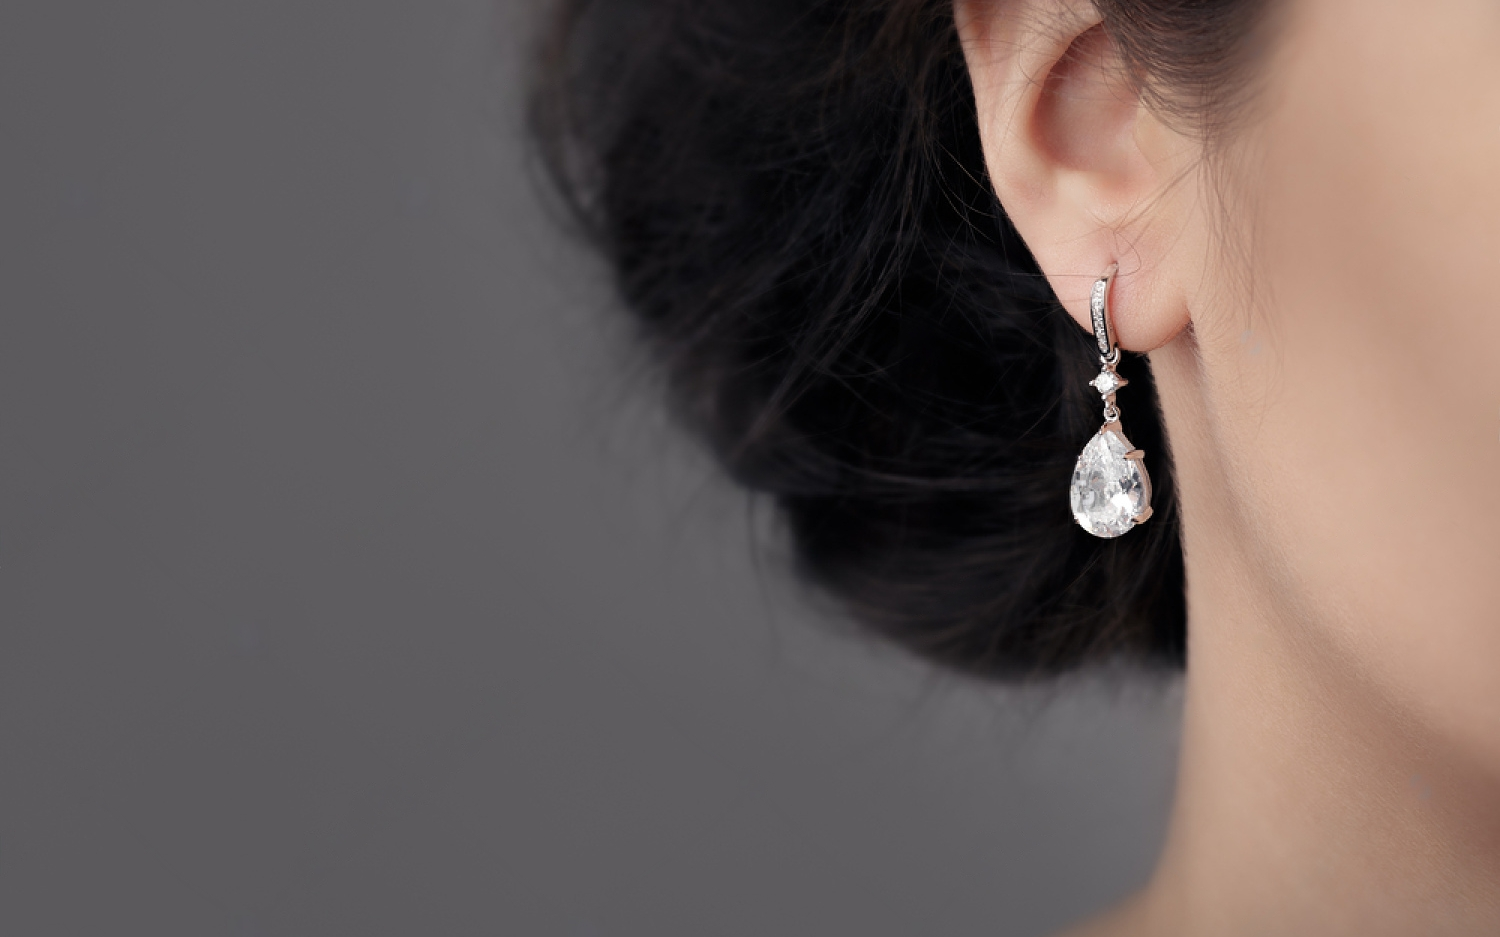 Teardrop Diamond: Celebrating Love With The Tear Of Joy